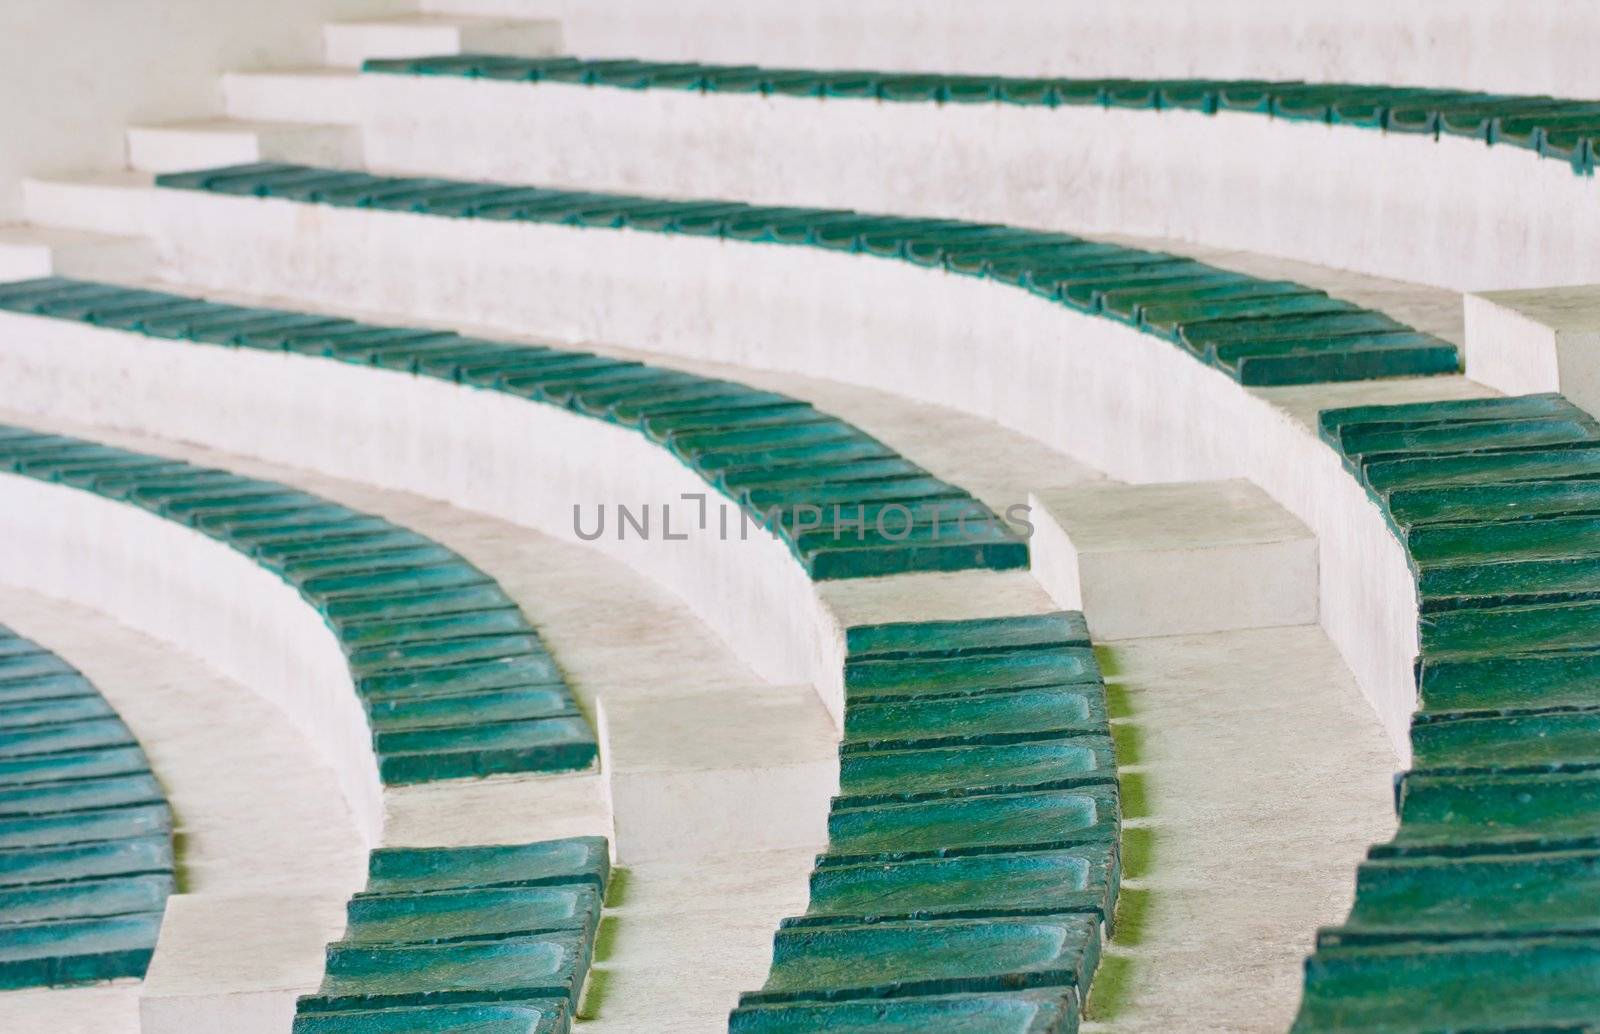 Stadium seats by Myimagine